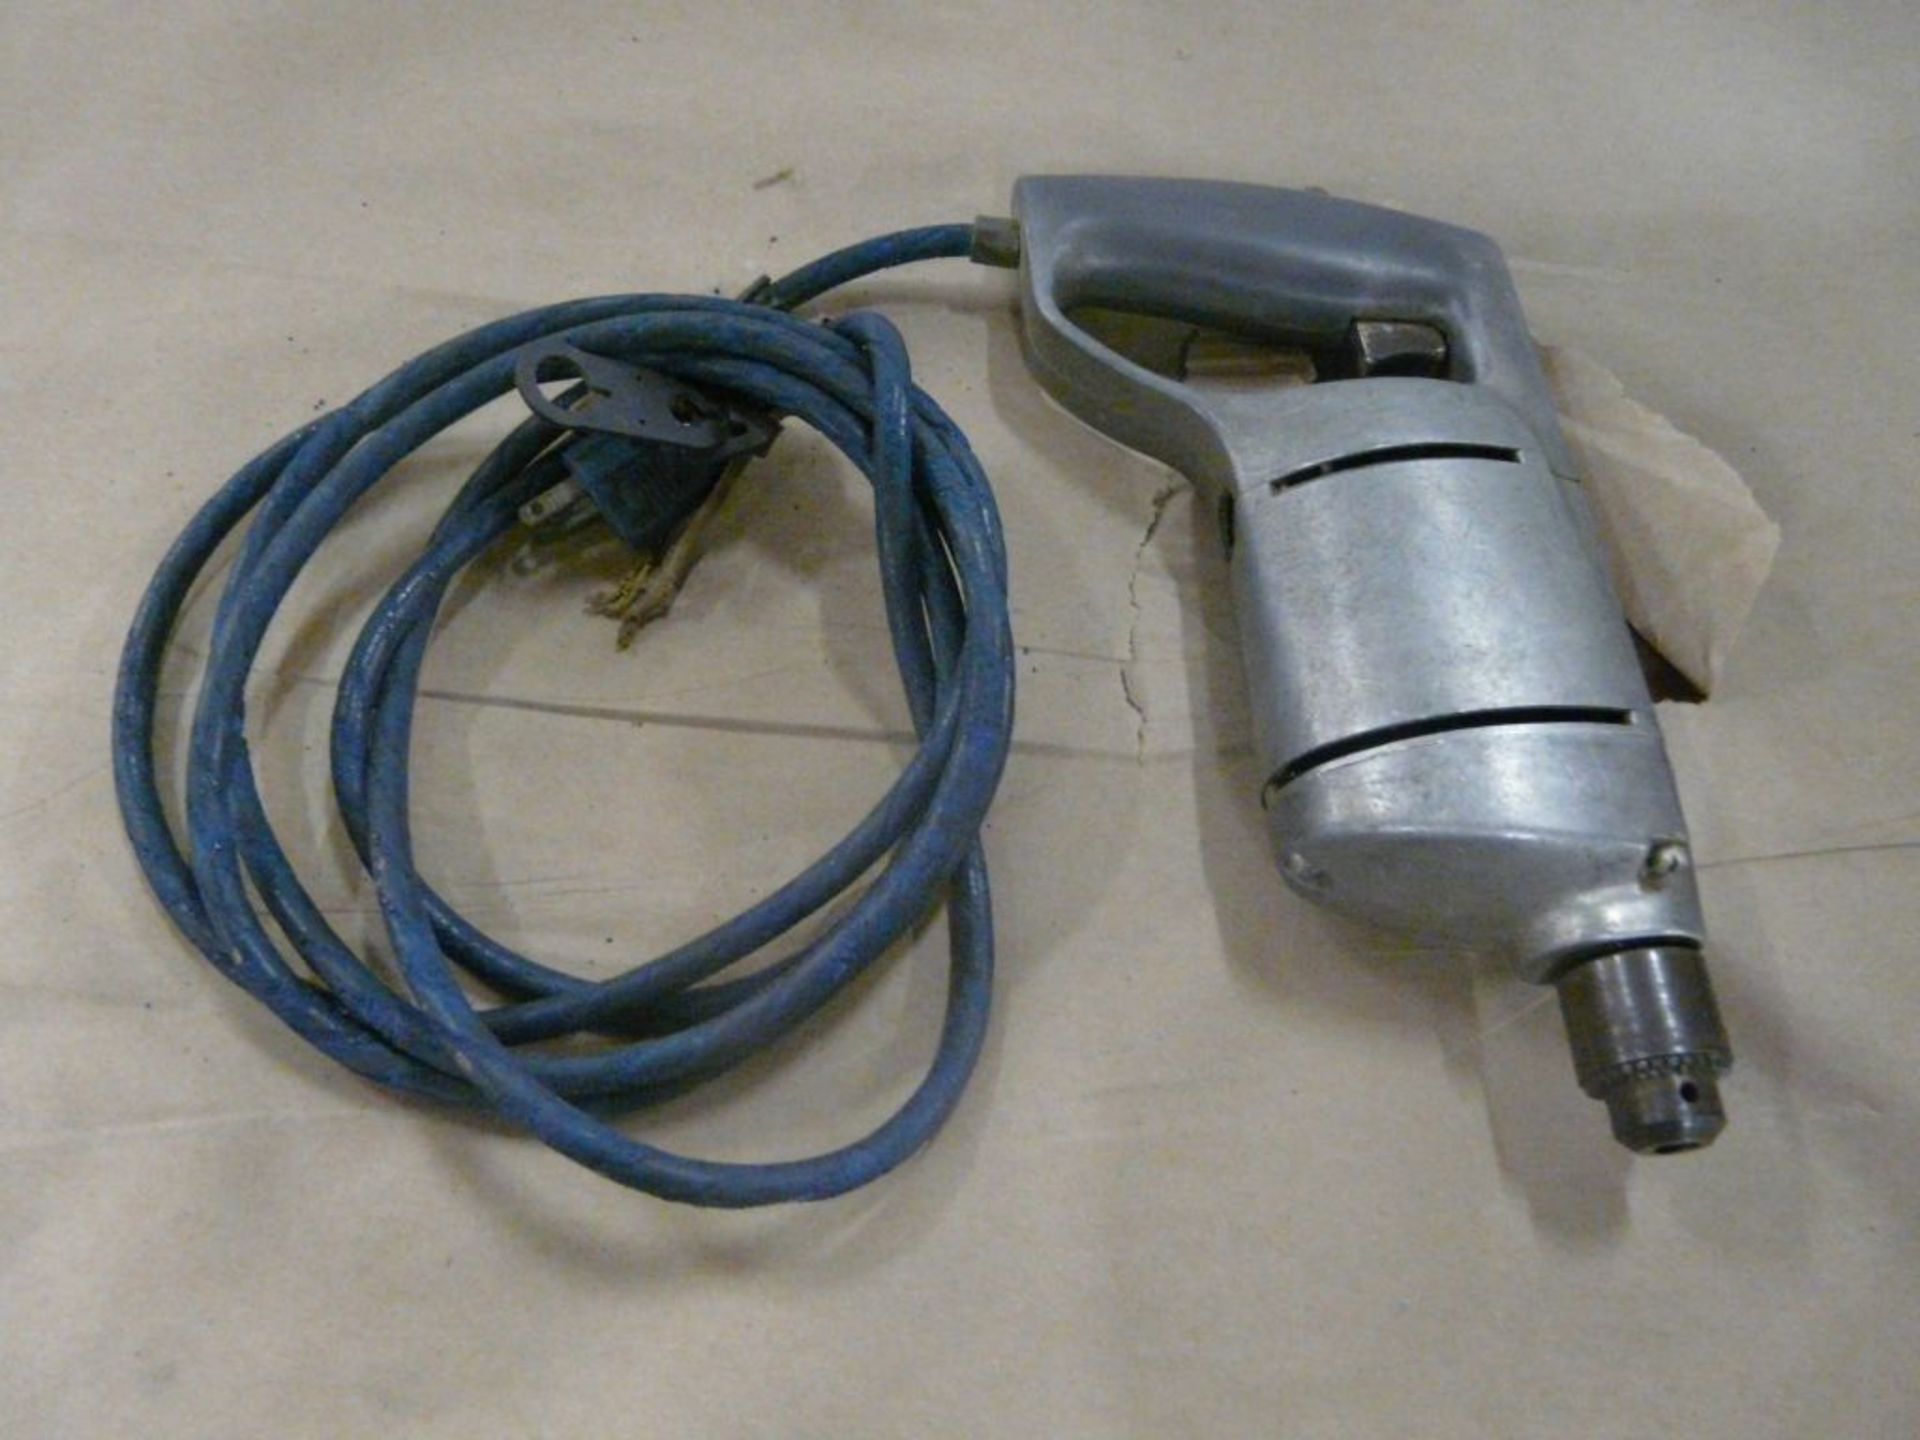 Craftsman Electric Drill|Model No. 315.7710; 1/4"; 120V - Image 3 of 3